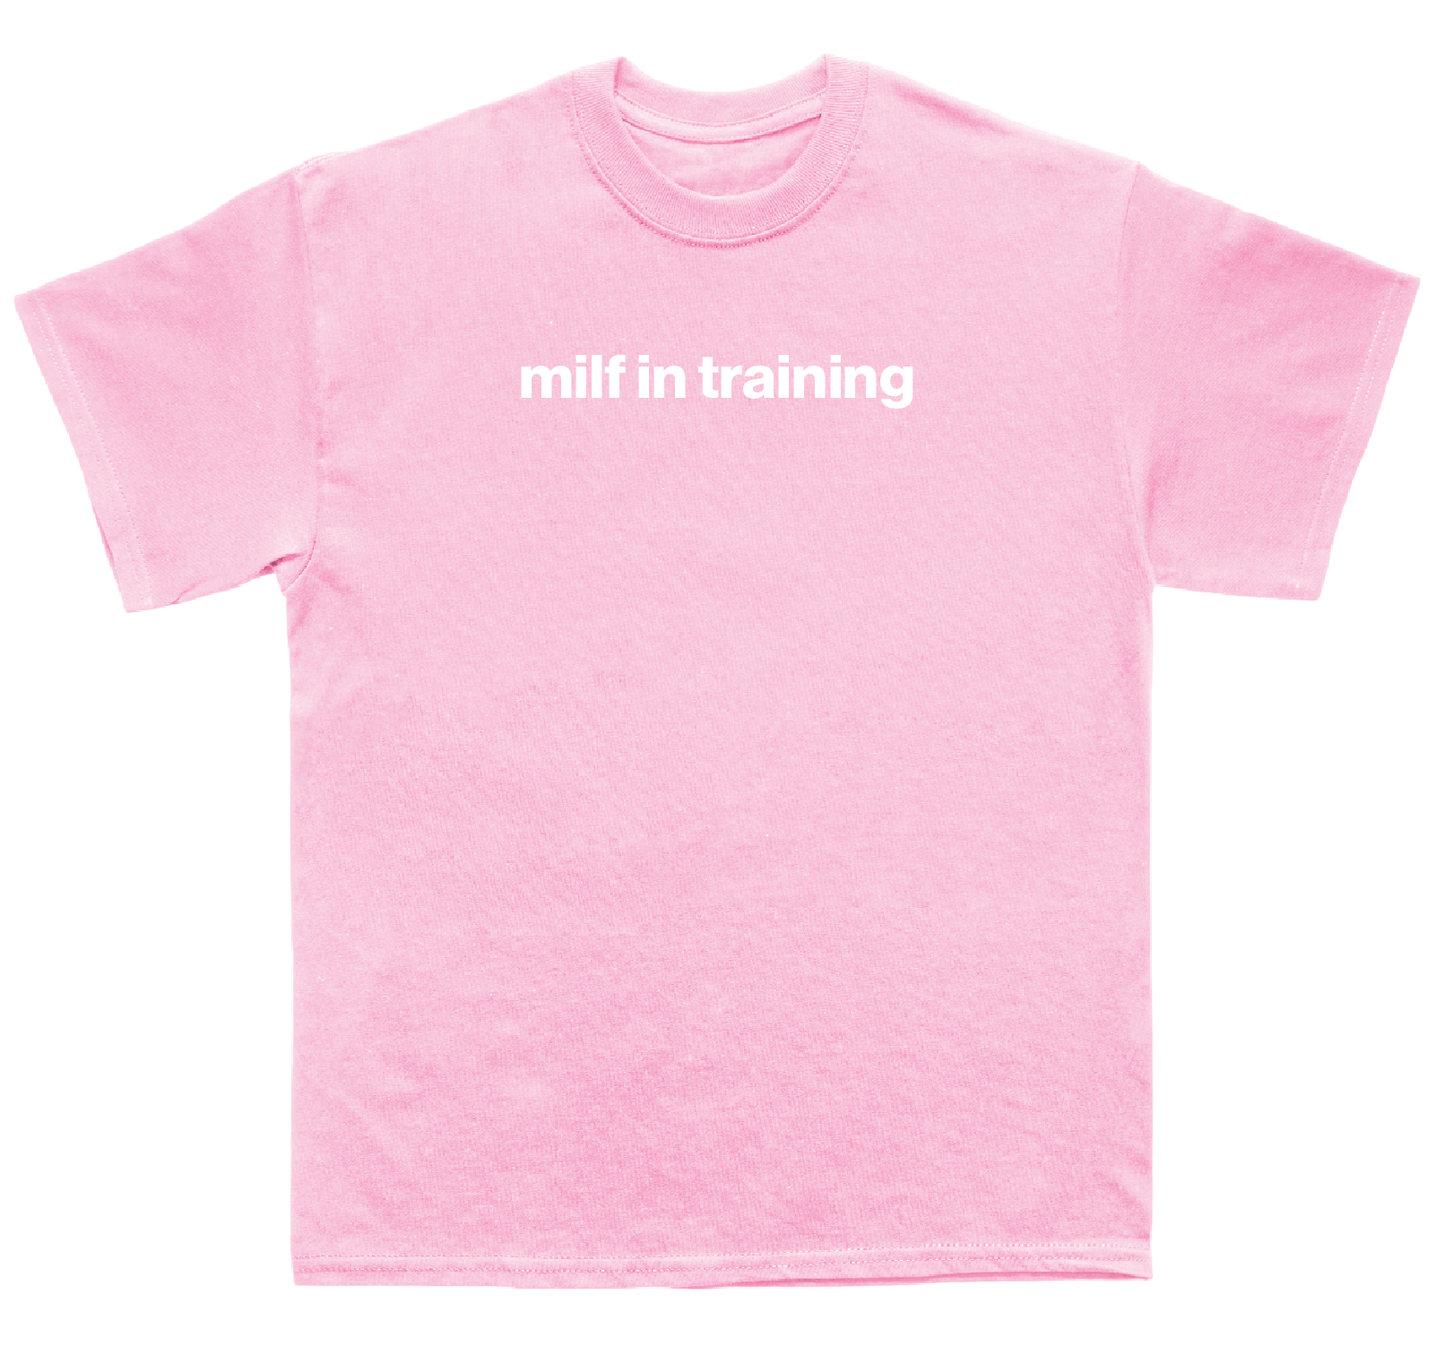 milf in training shirt